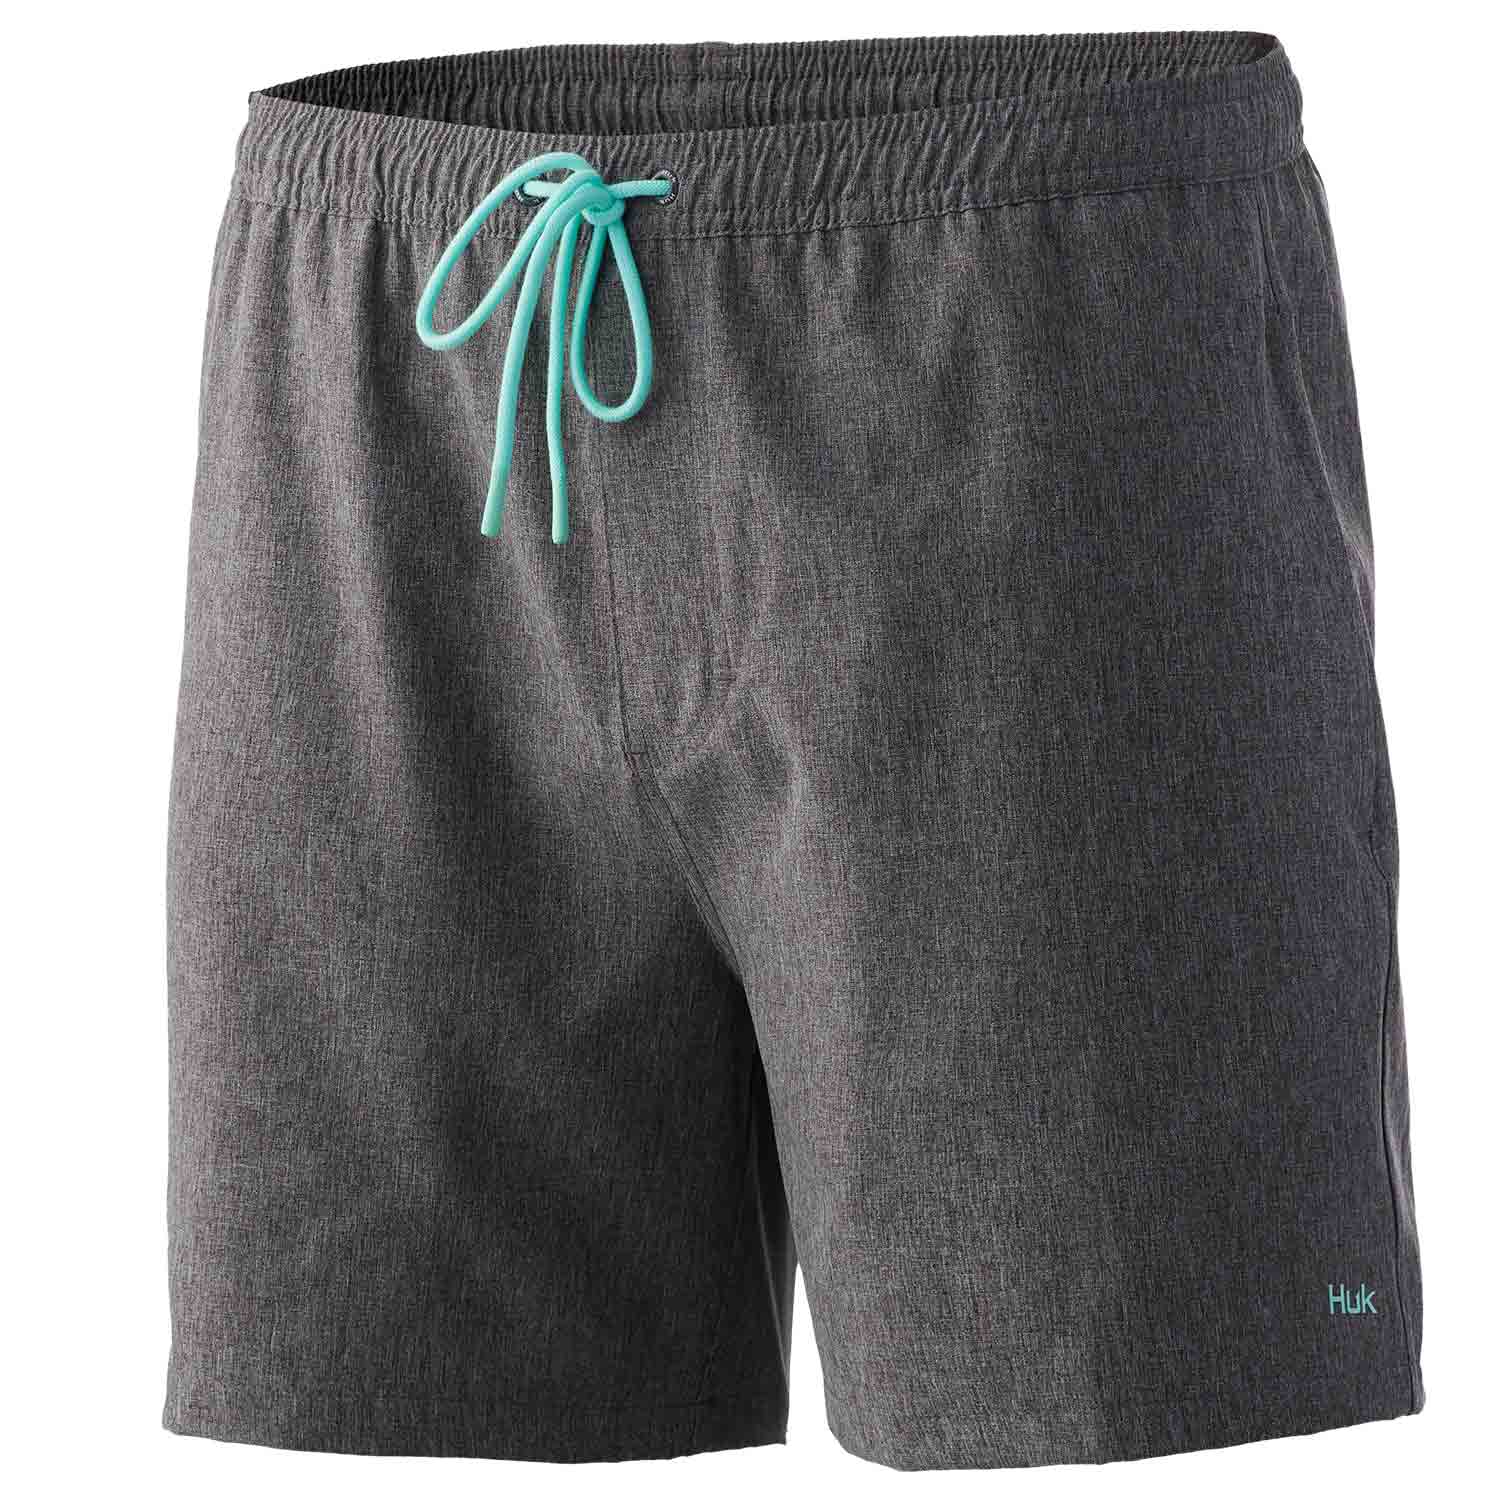 Huk Gray Board Shorts for Men